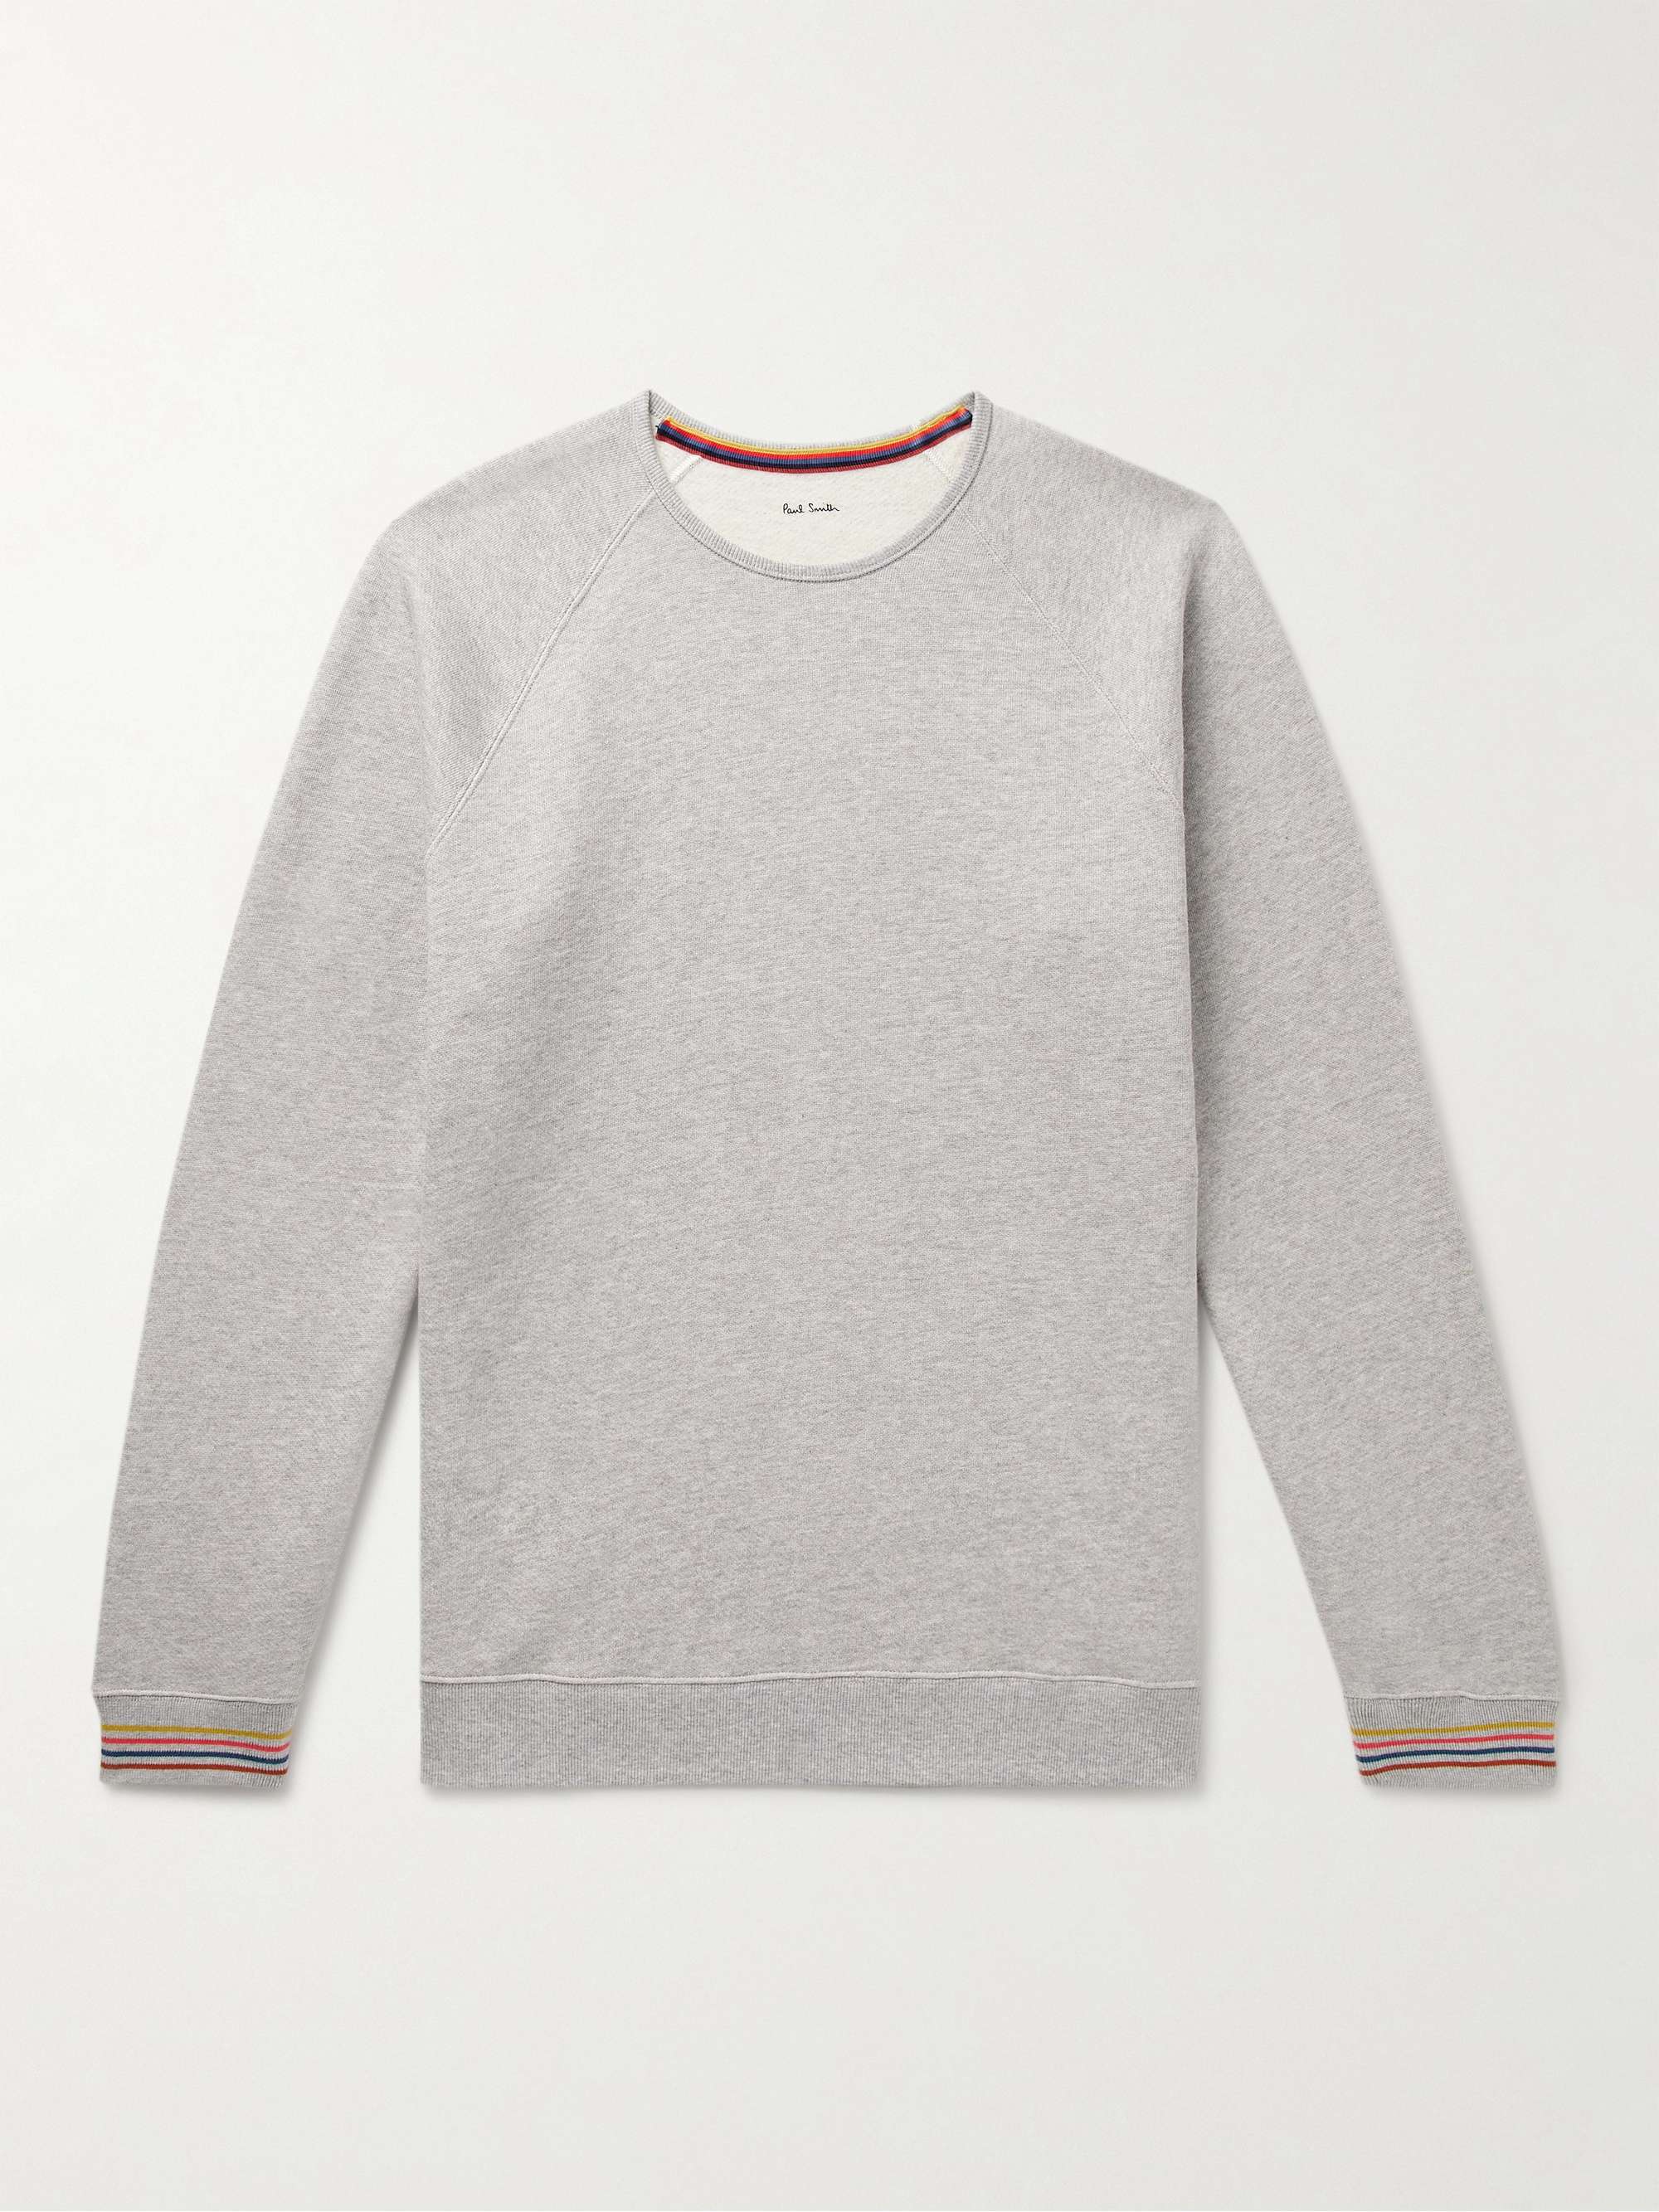 PAUL SMITH Striped Cotton-Jersey Sweatshirt for Men | MR PORTER